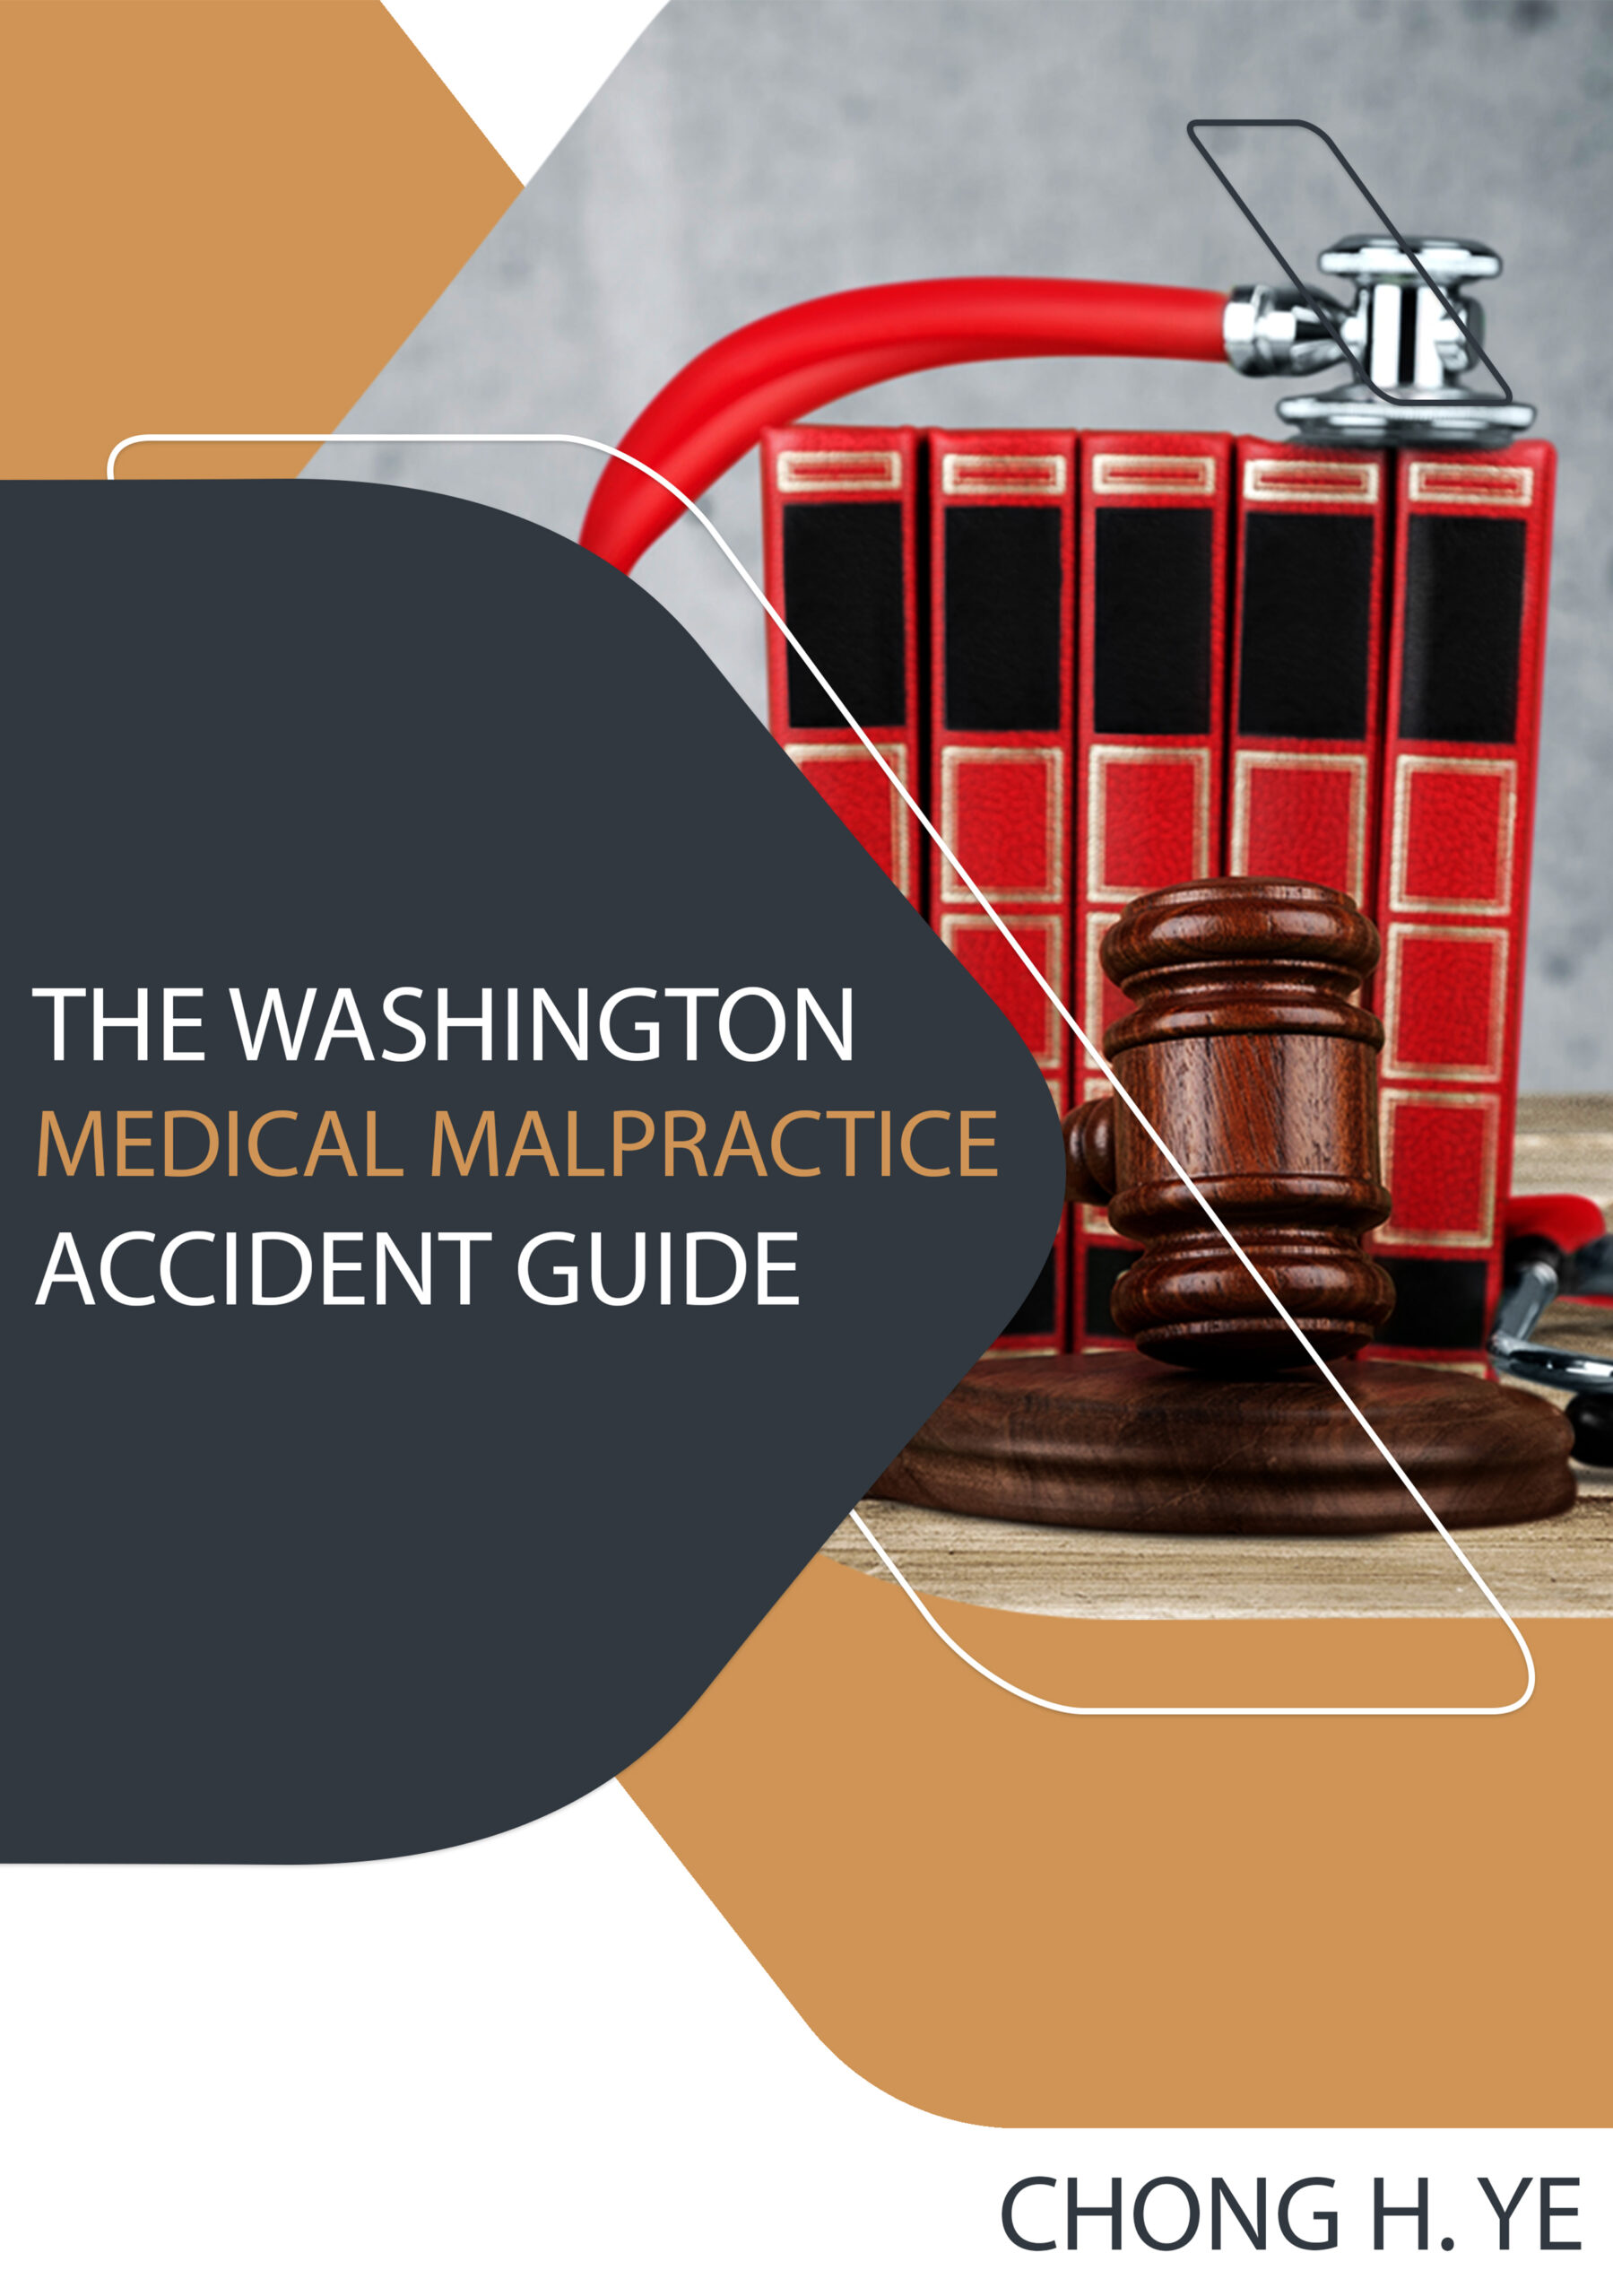 The Washington Medical Malpractice Guide